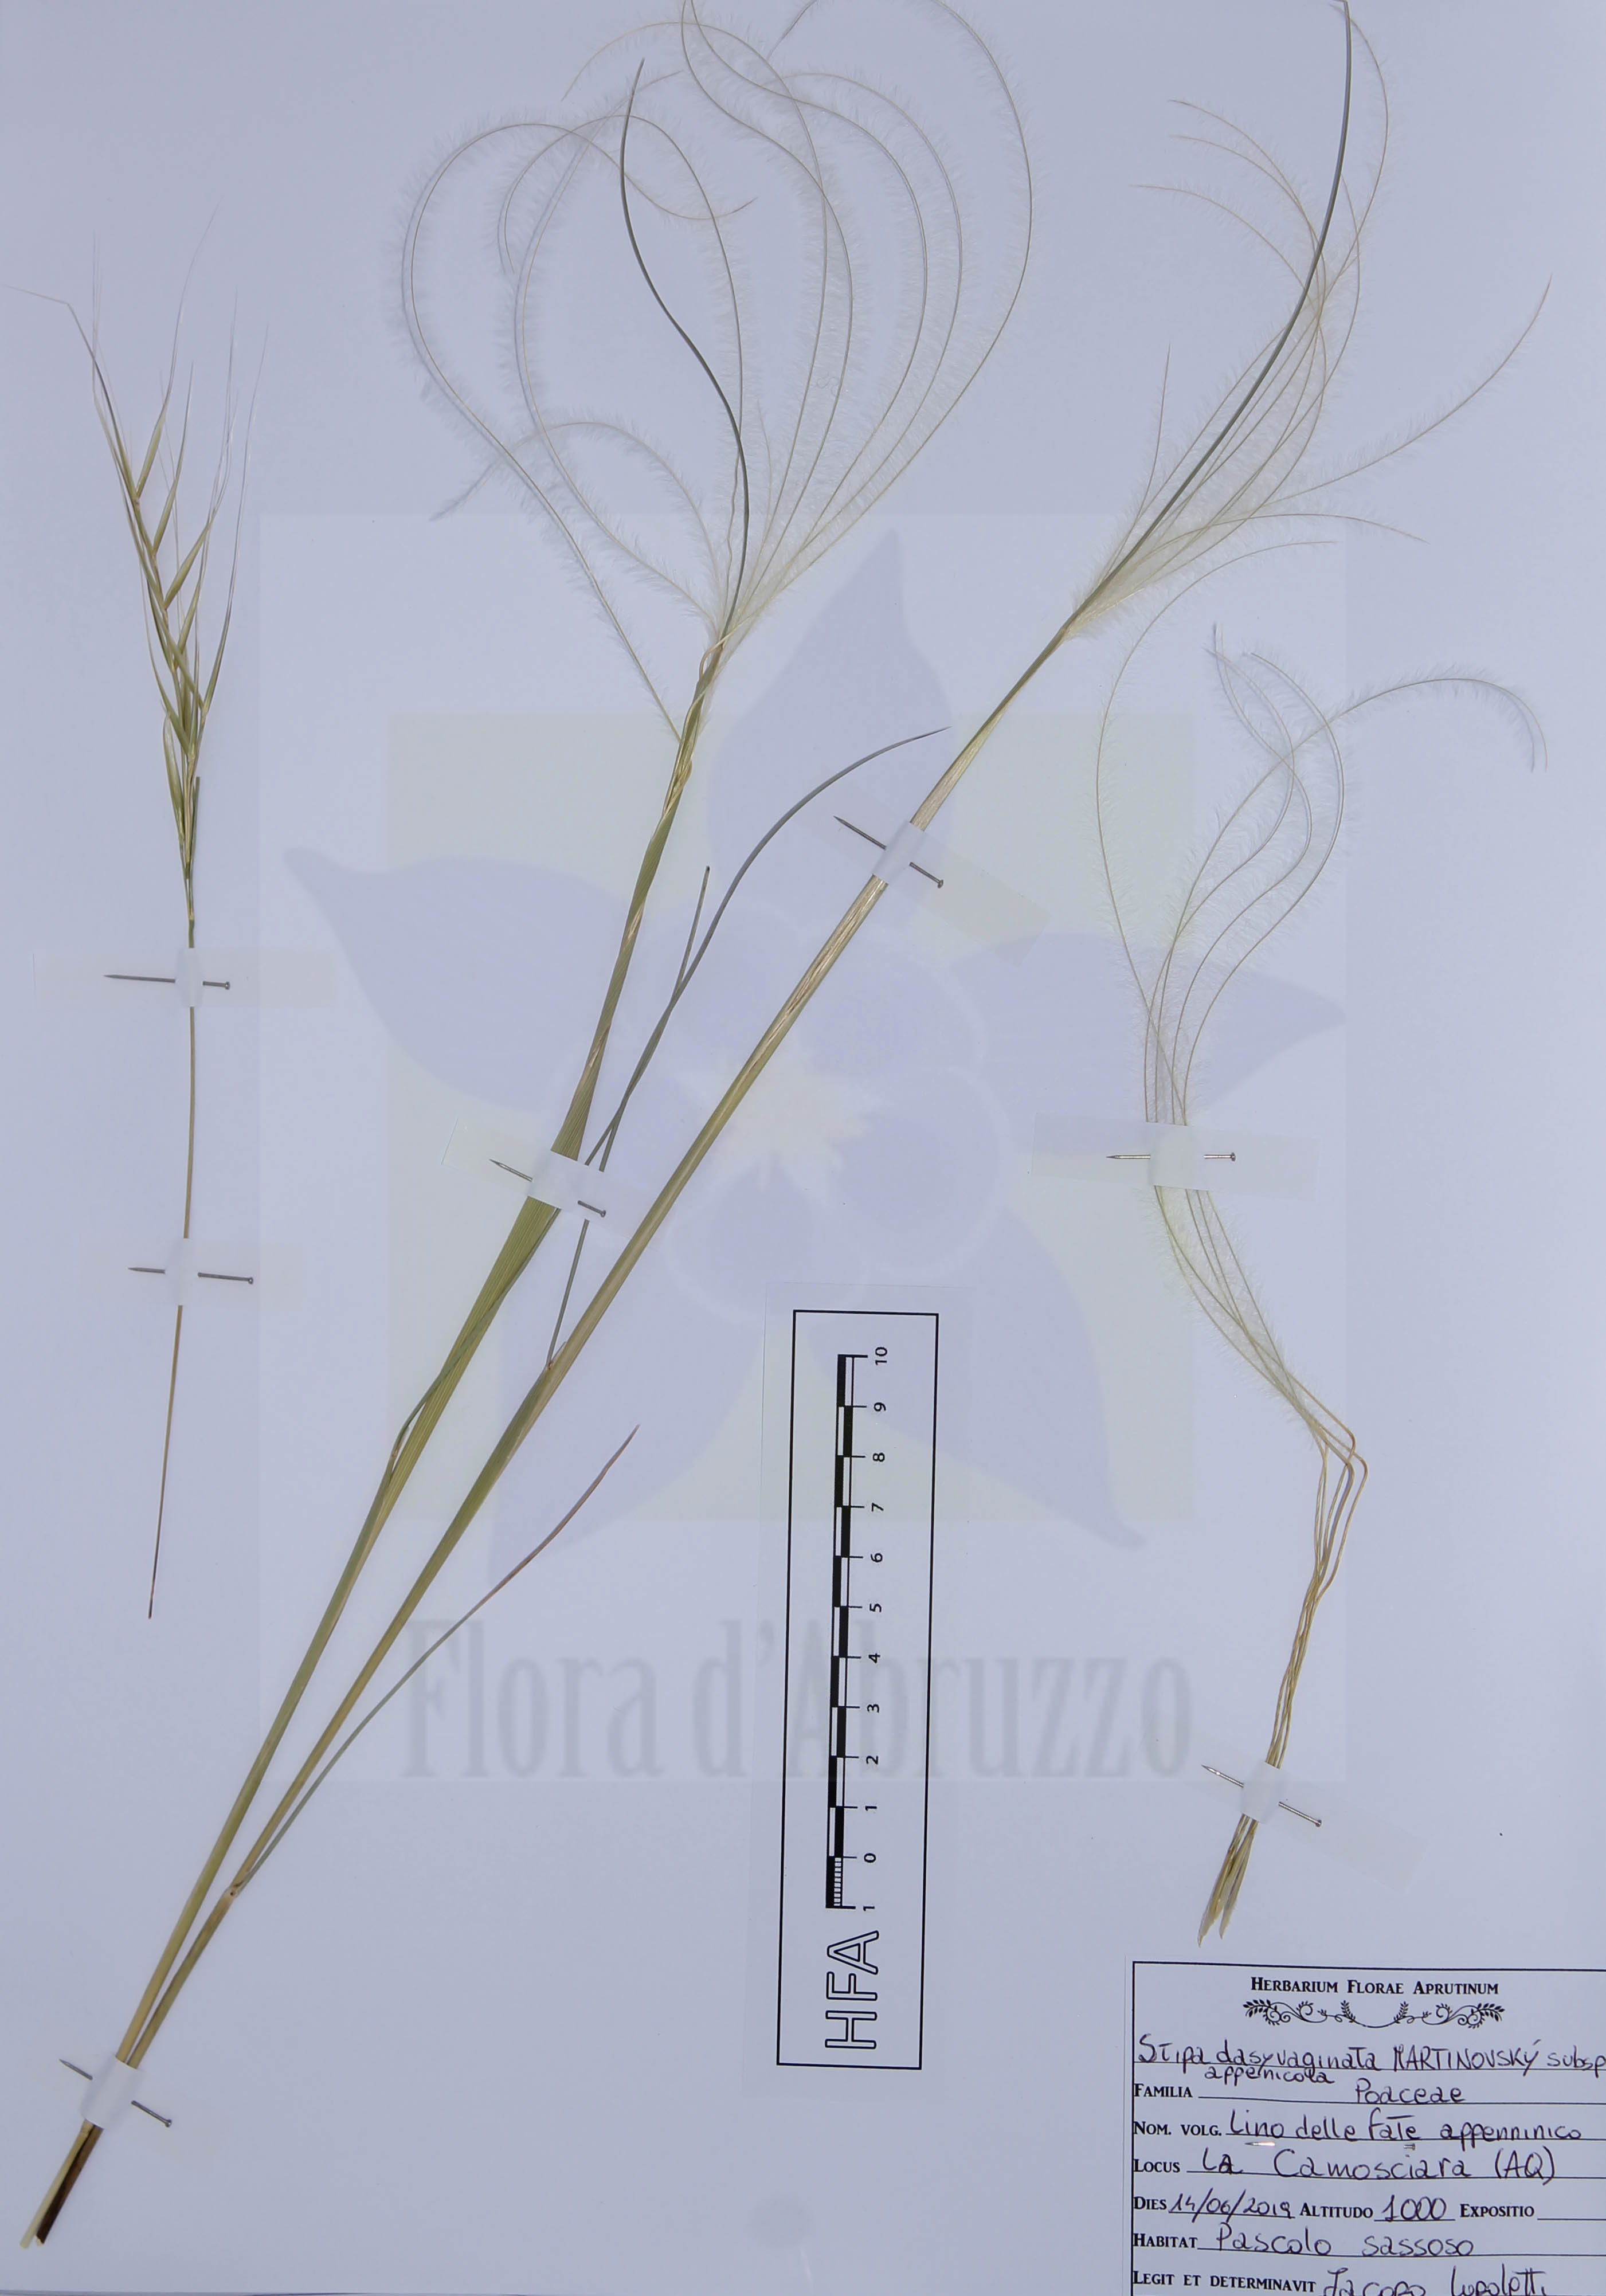 Stipa dasyvaginata Martinovský subsp. apenninicola Martinovský & Moraldo